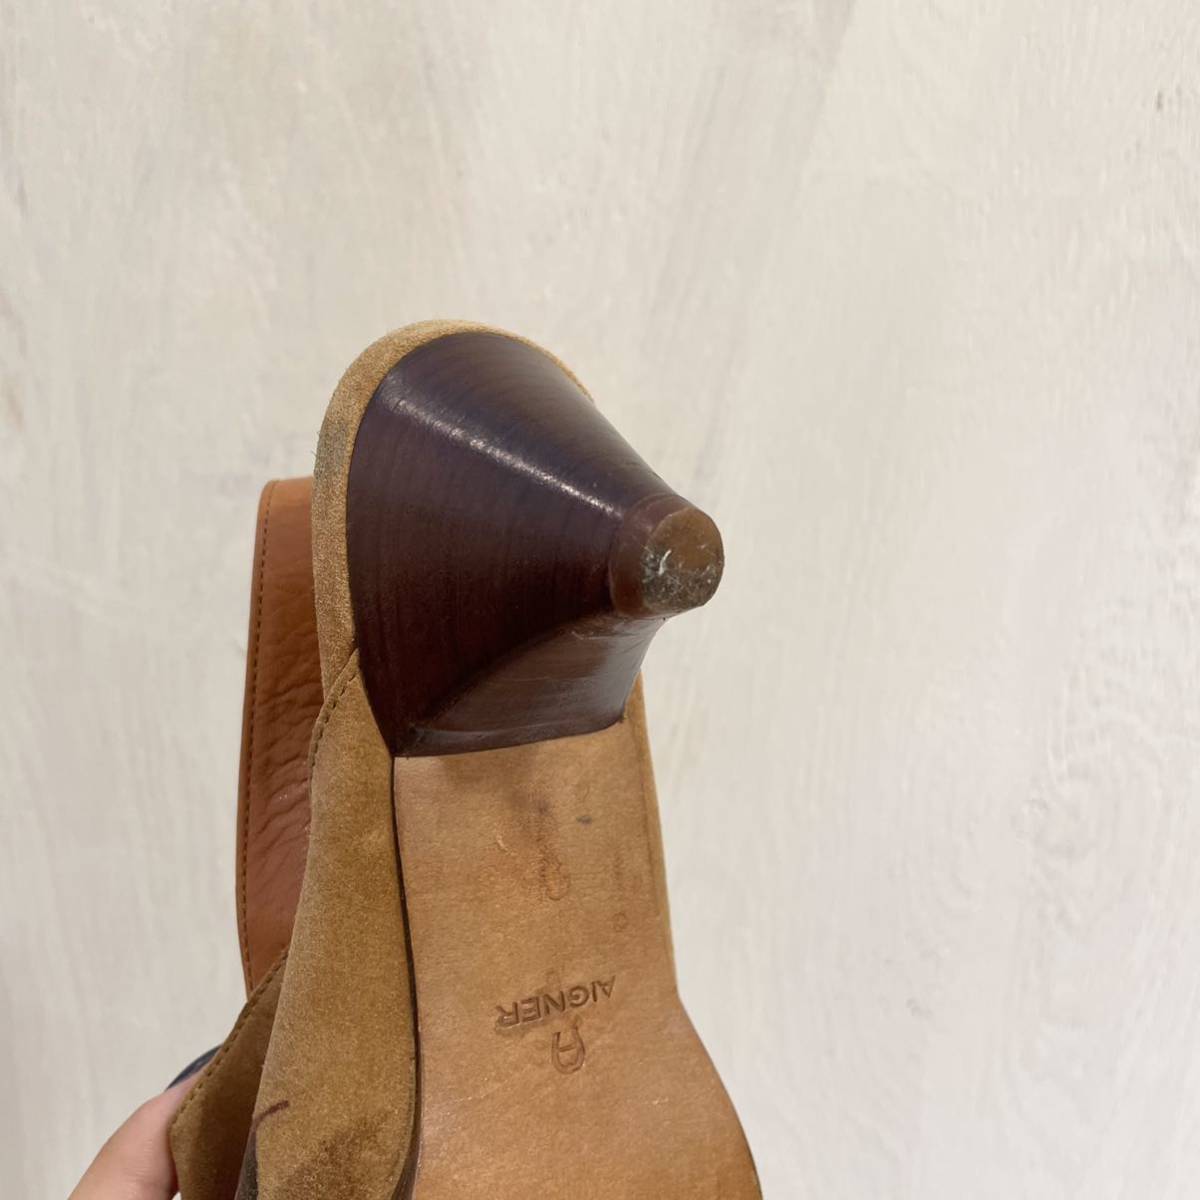 AIGNER/shoes/brown/heel/アイグナー/サボ/茶色/木の葉/スウェード/ヒール/靴_画像9